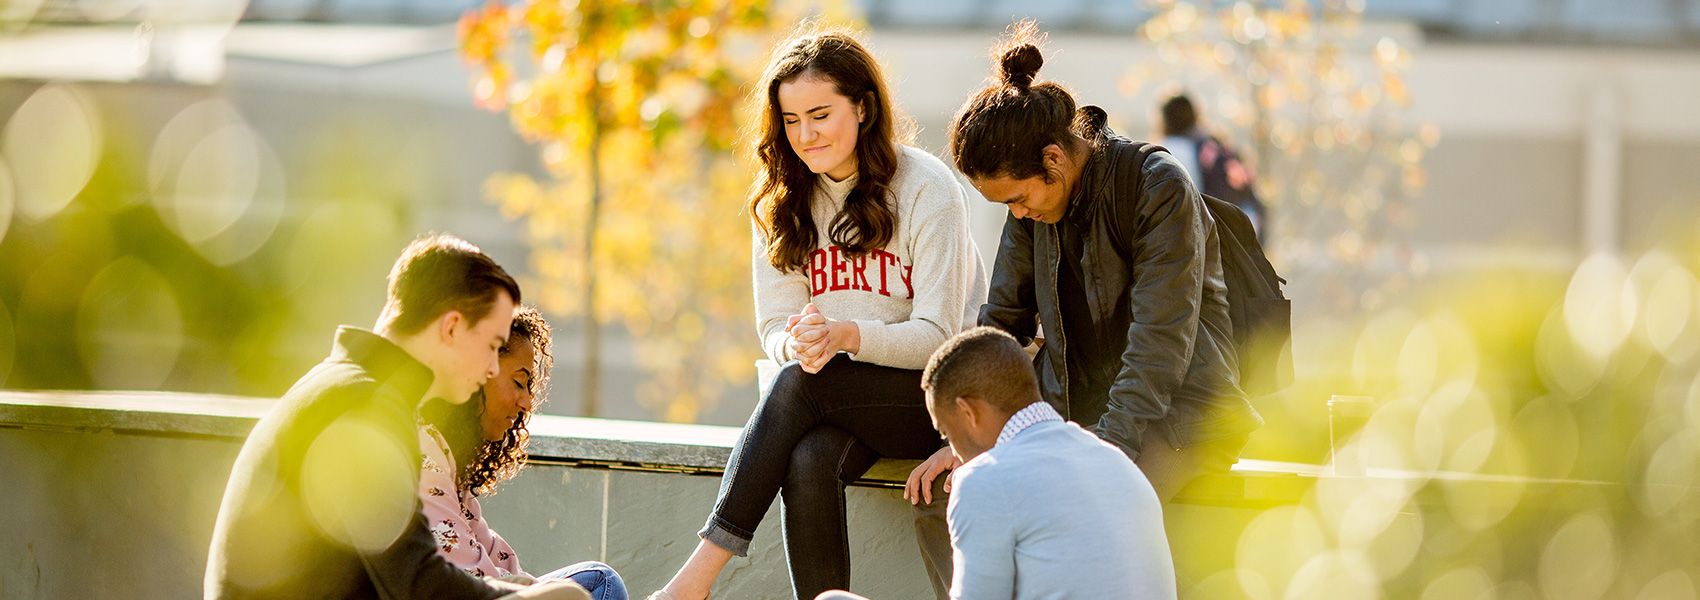 students praying on campus